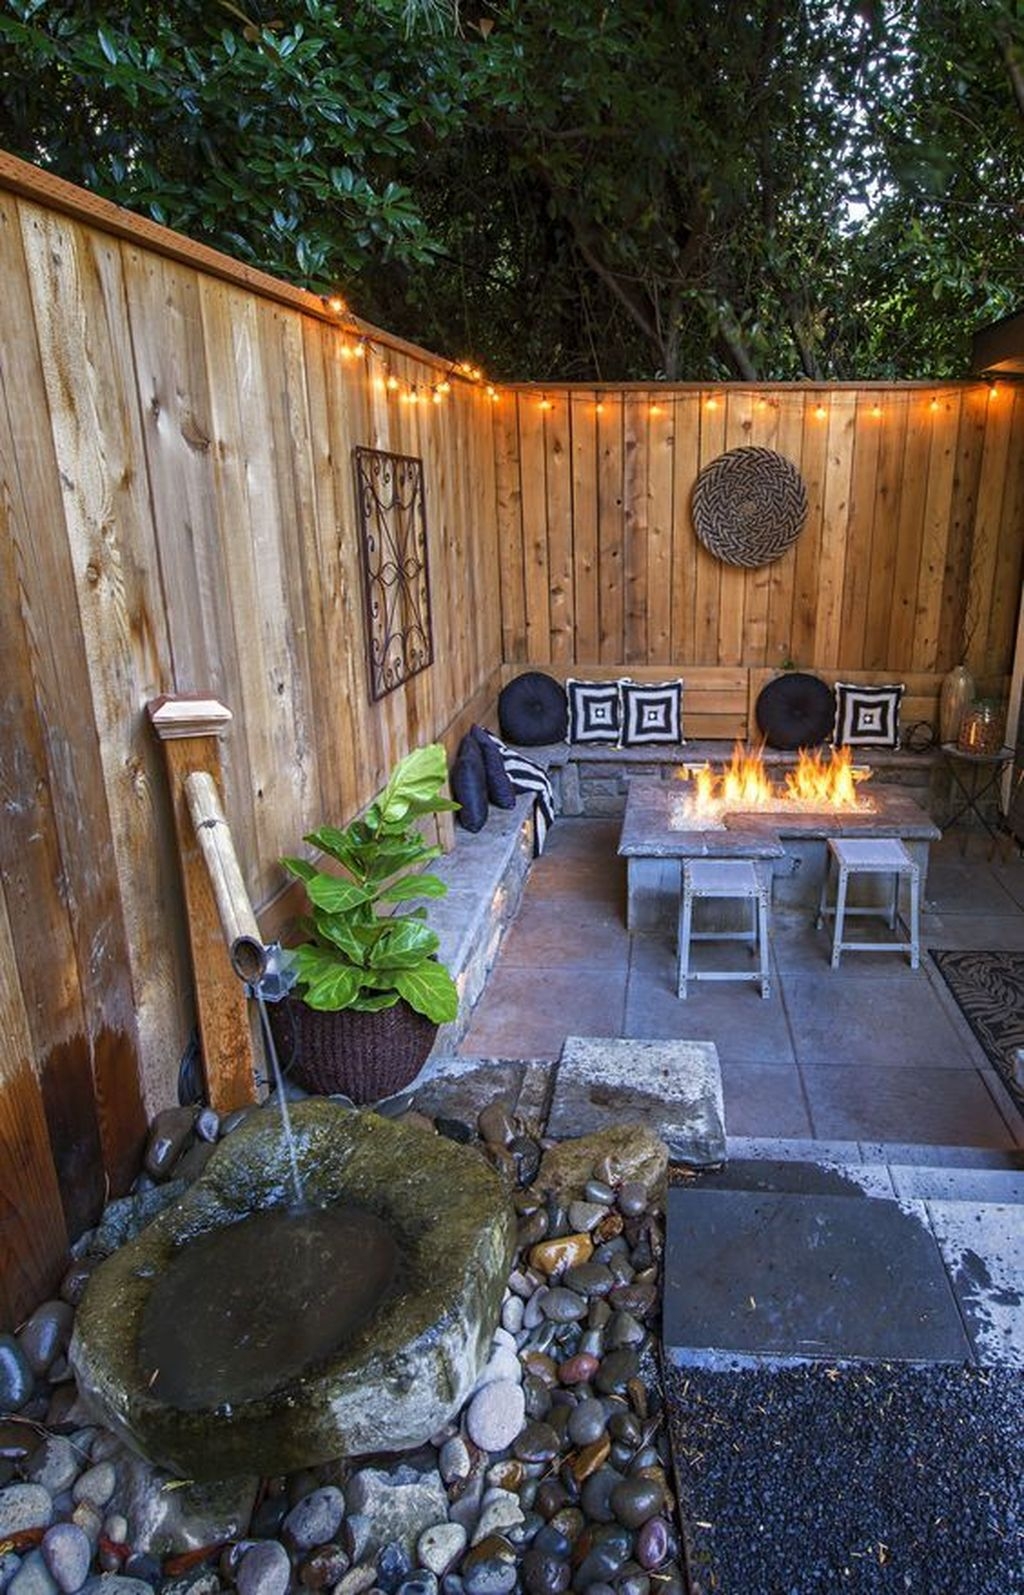 42 Brilliant Small Backyard Design Ideas On A Budget Pimphomee